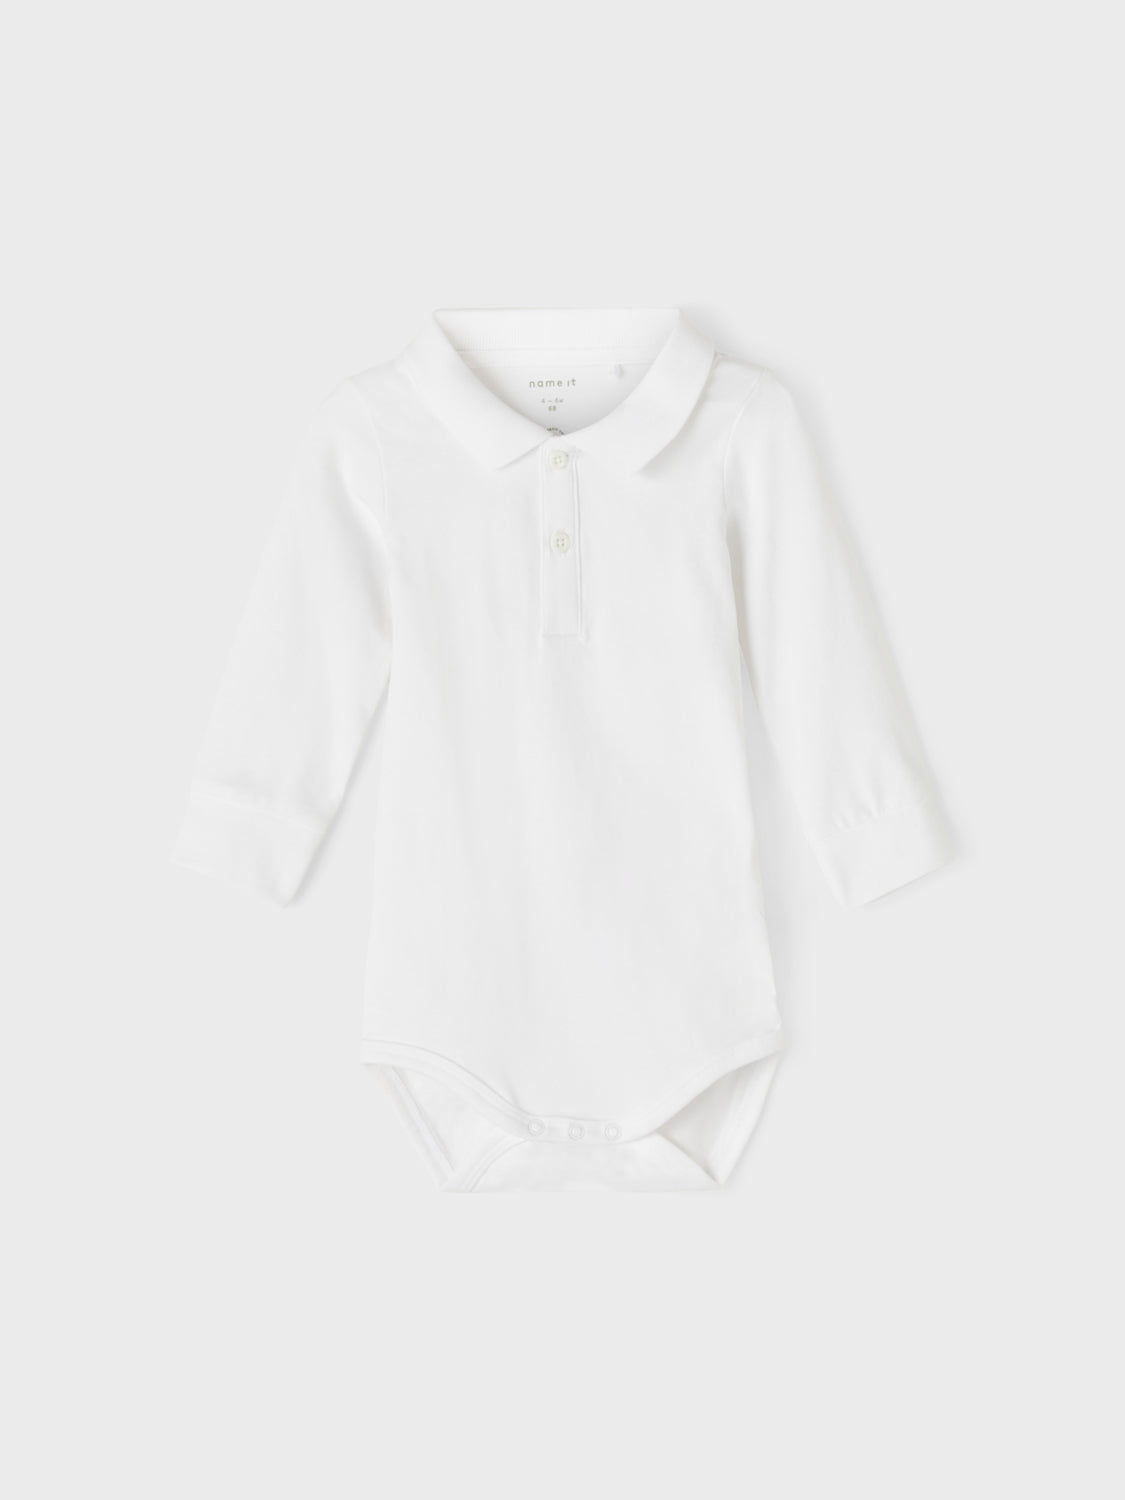 NBMHOLGER T-shirts & Tops - Bright White